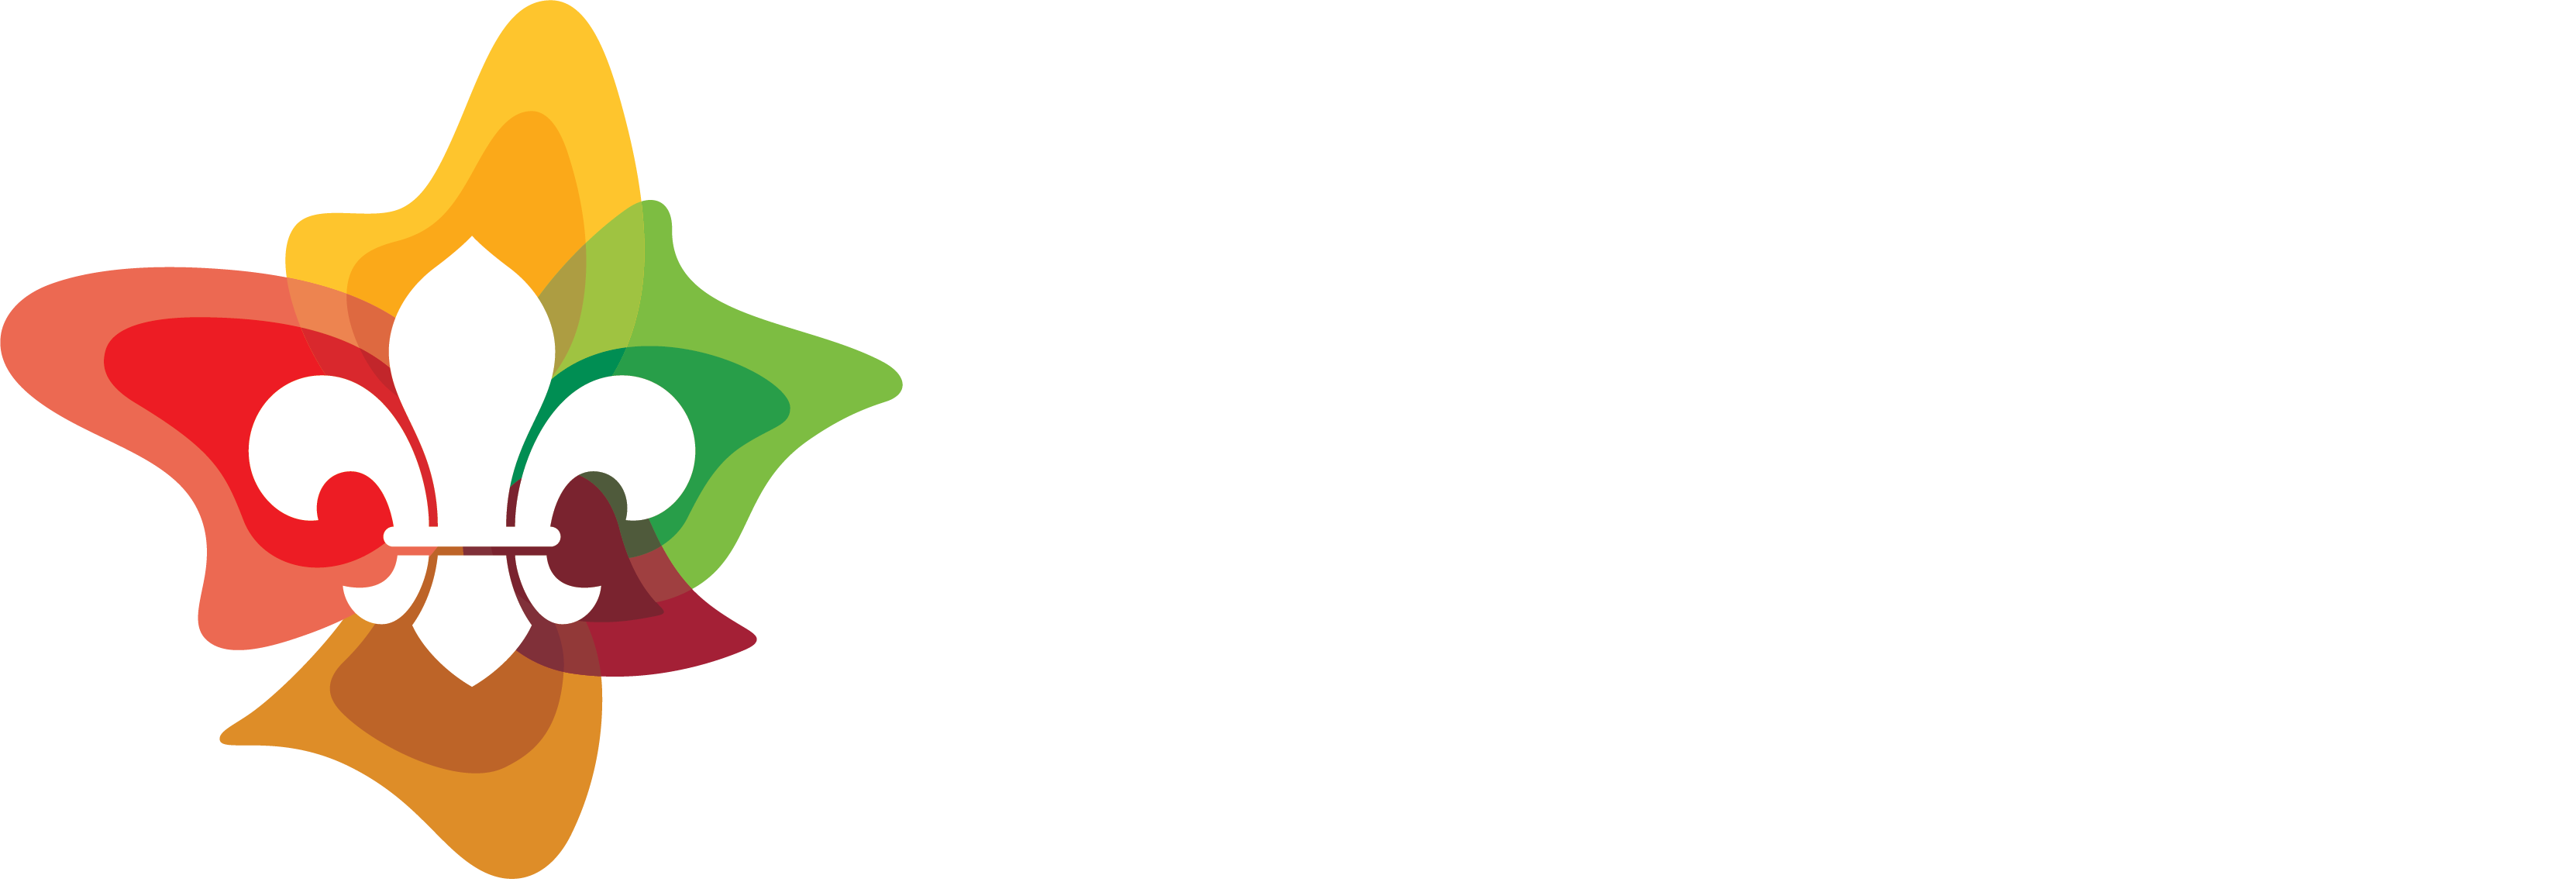 Scouts Australia Logo